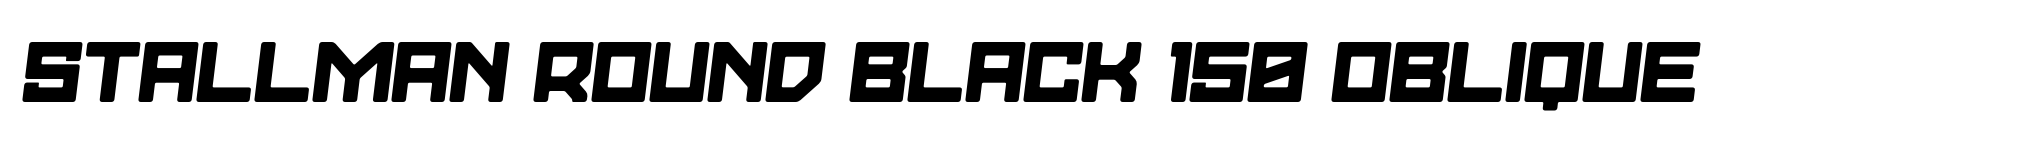 Stallman Round Black 150 Oblique image